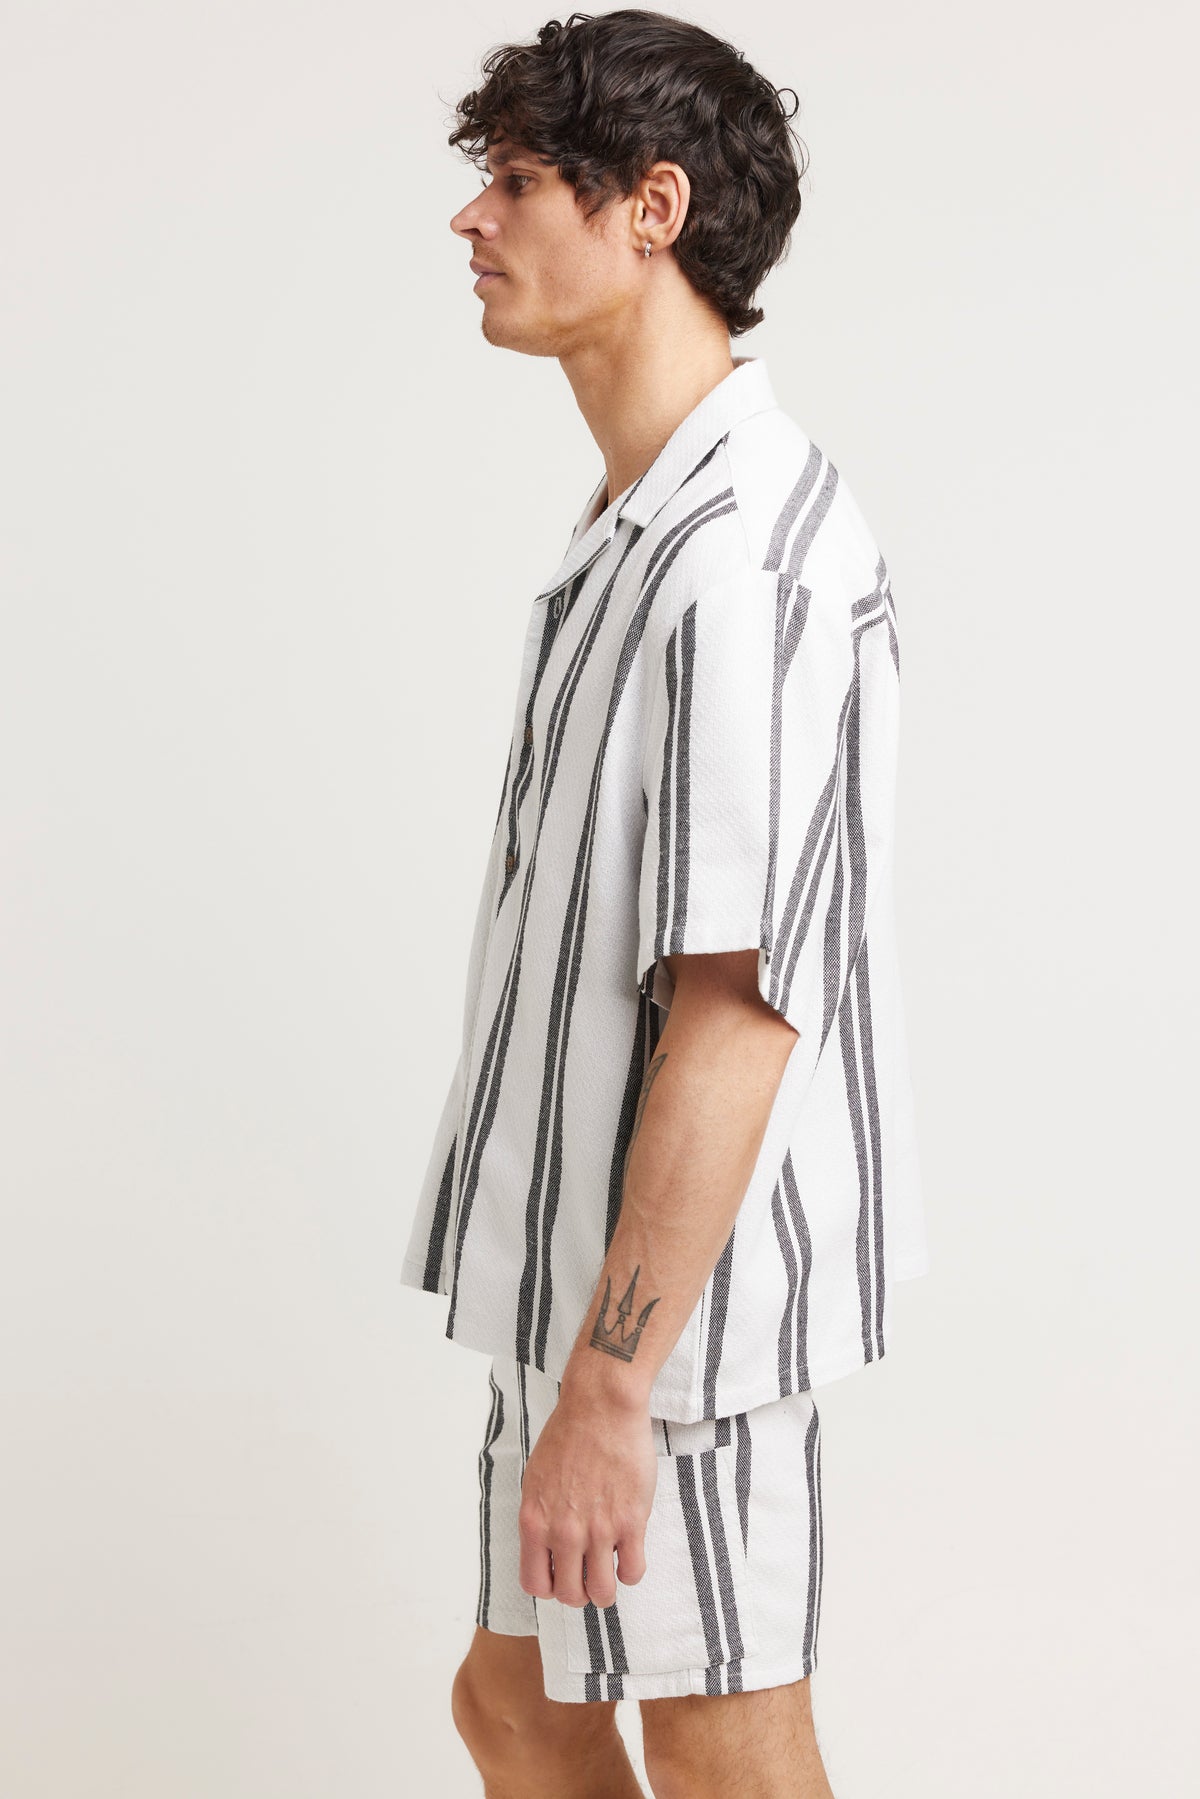 Capri Cotton Shirt Black Stripe